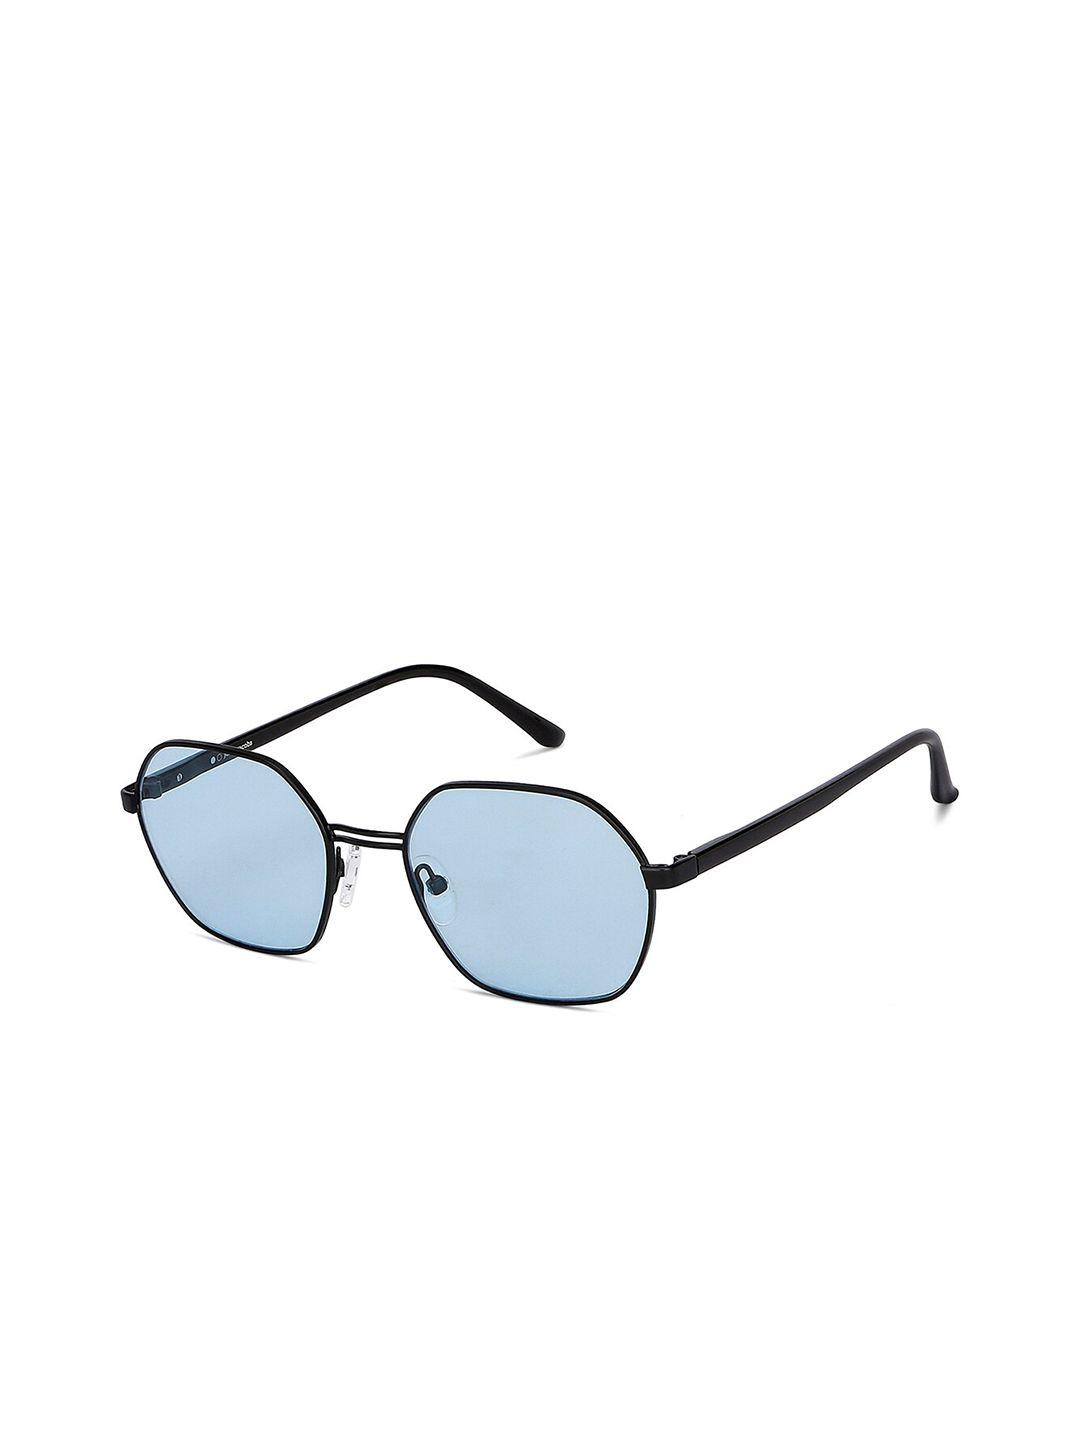 john jacobs unisex blue lens & black square sunglasses with uv protected lens 147271